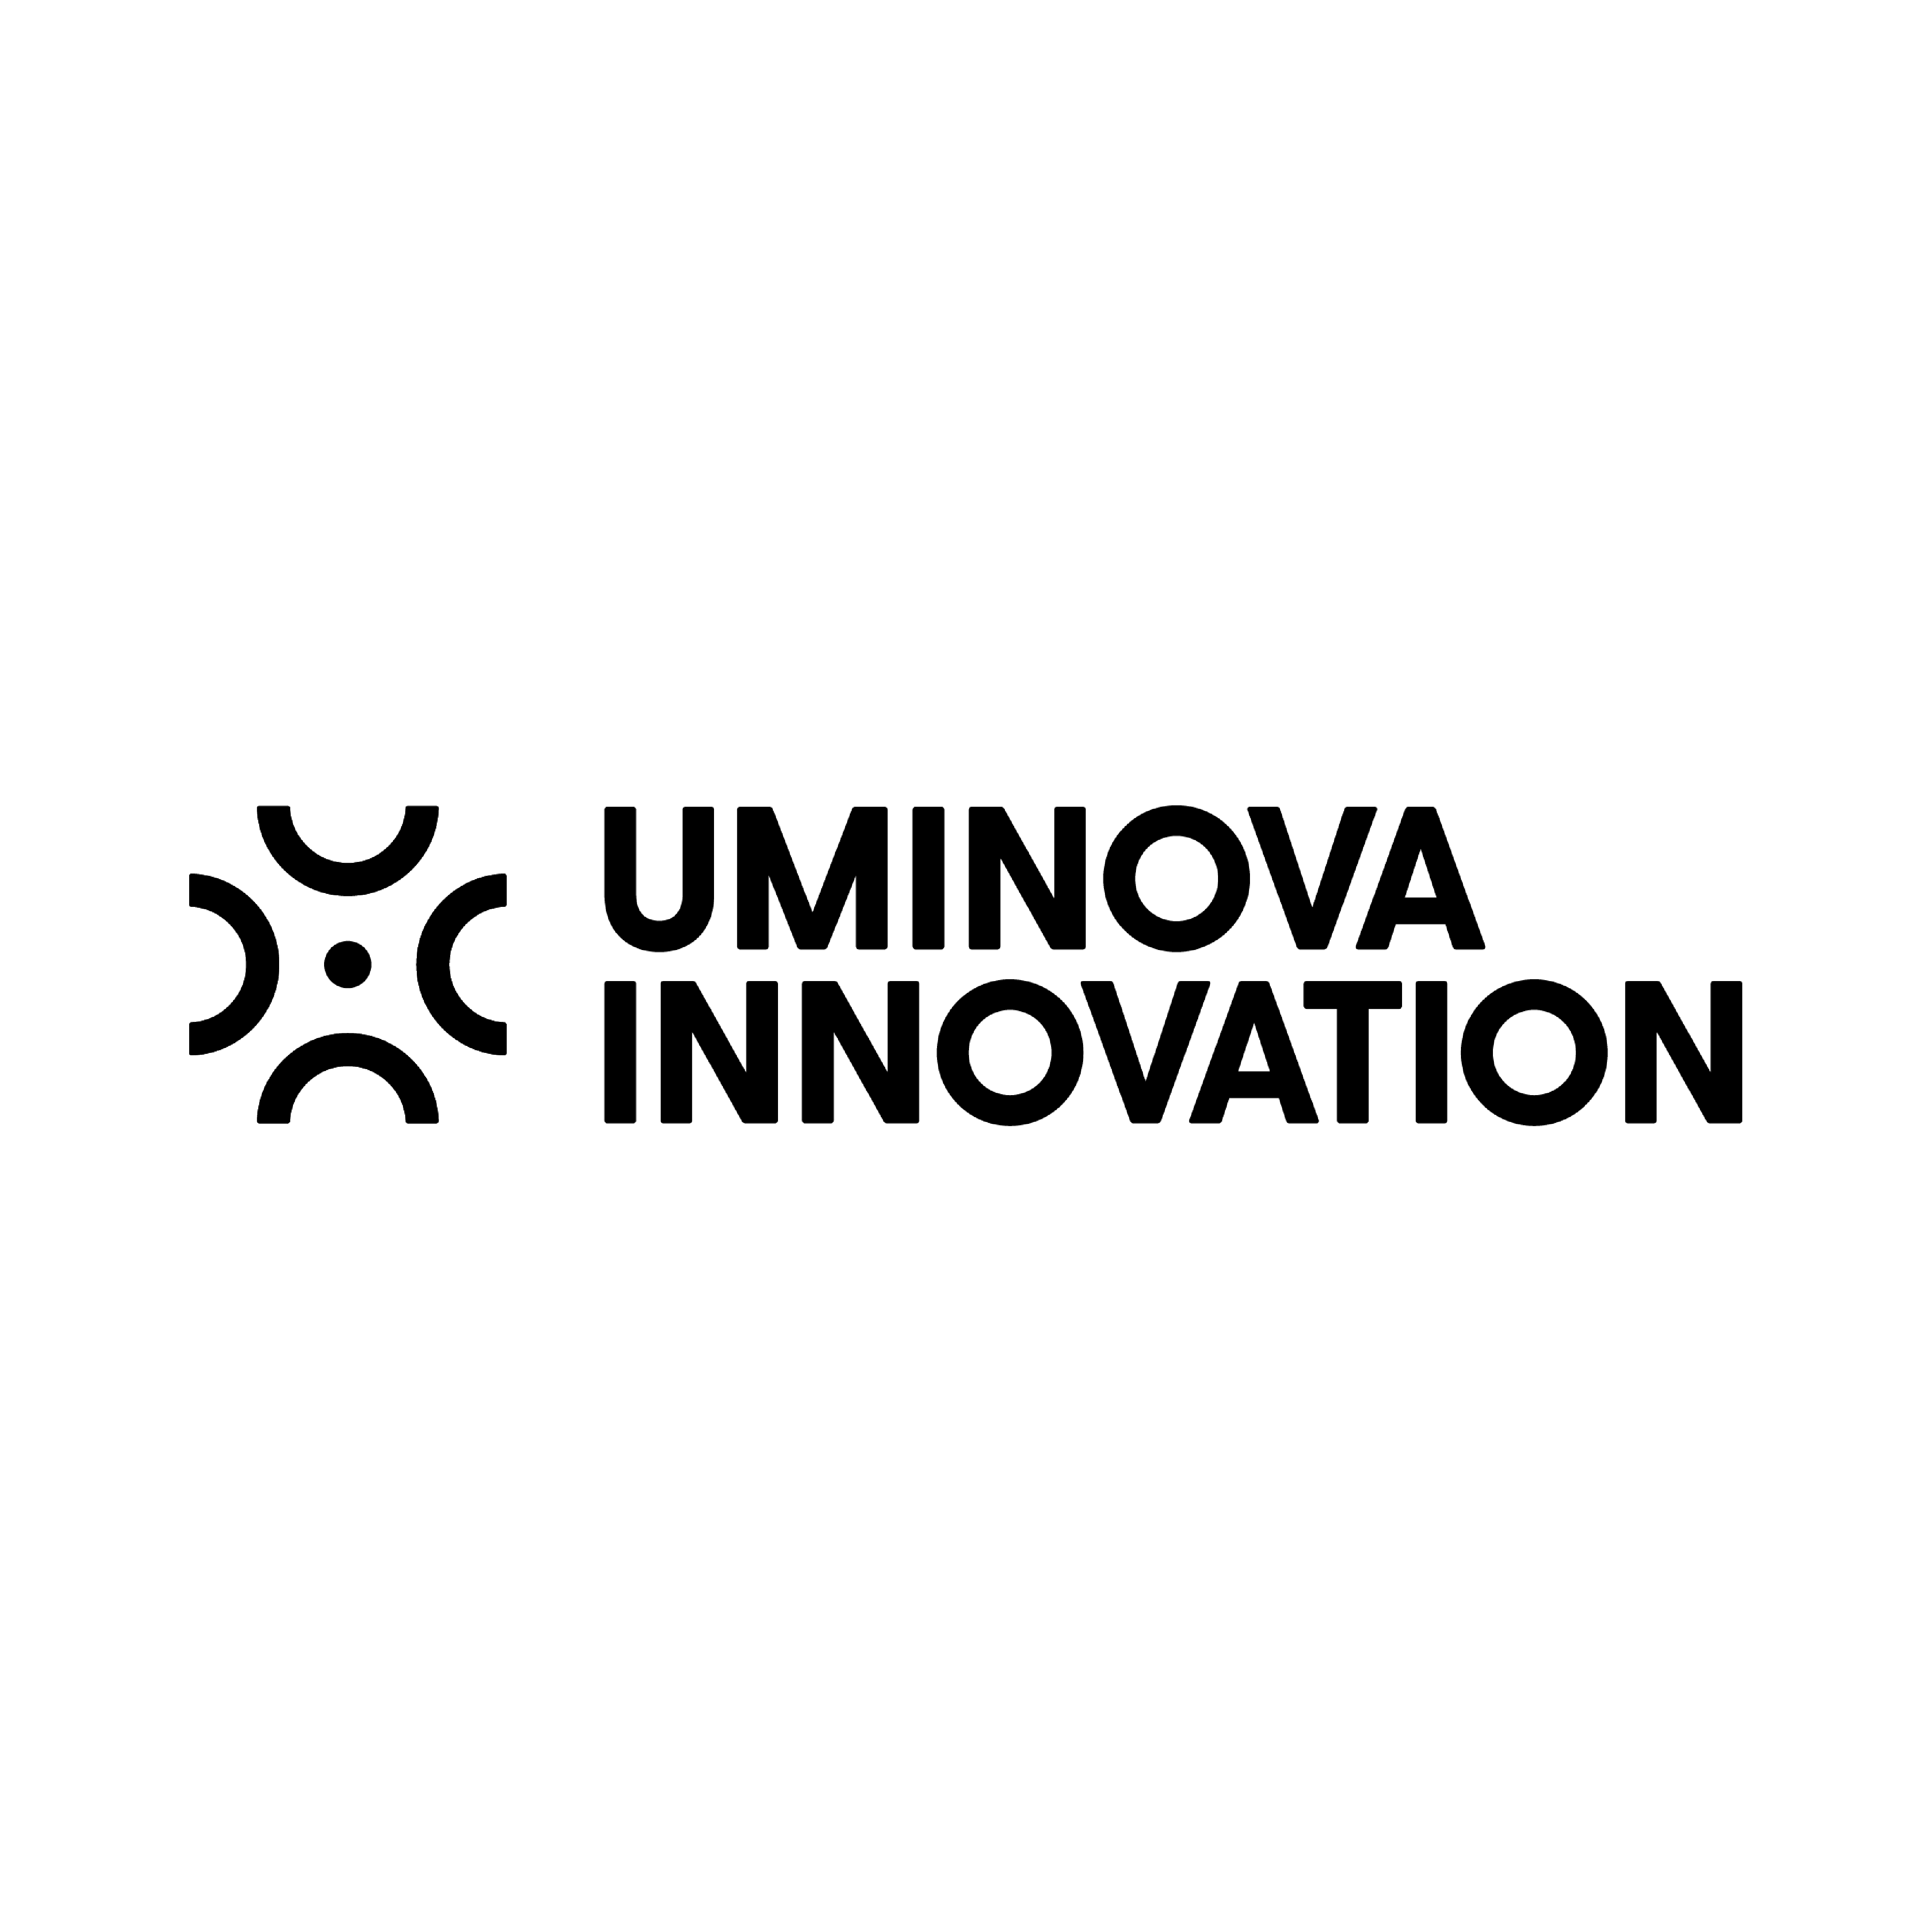 Black Uminova Innovation logo.